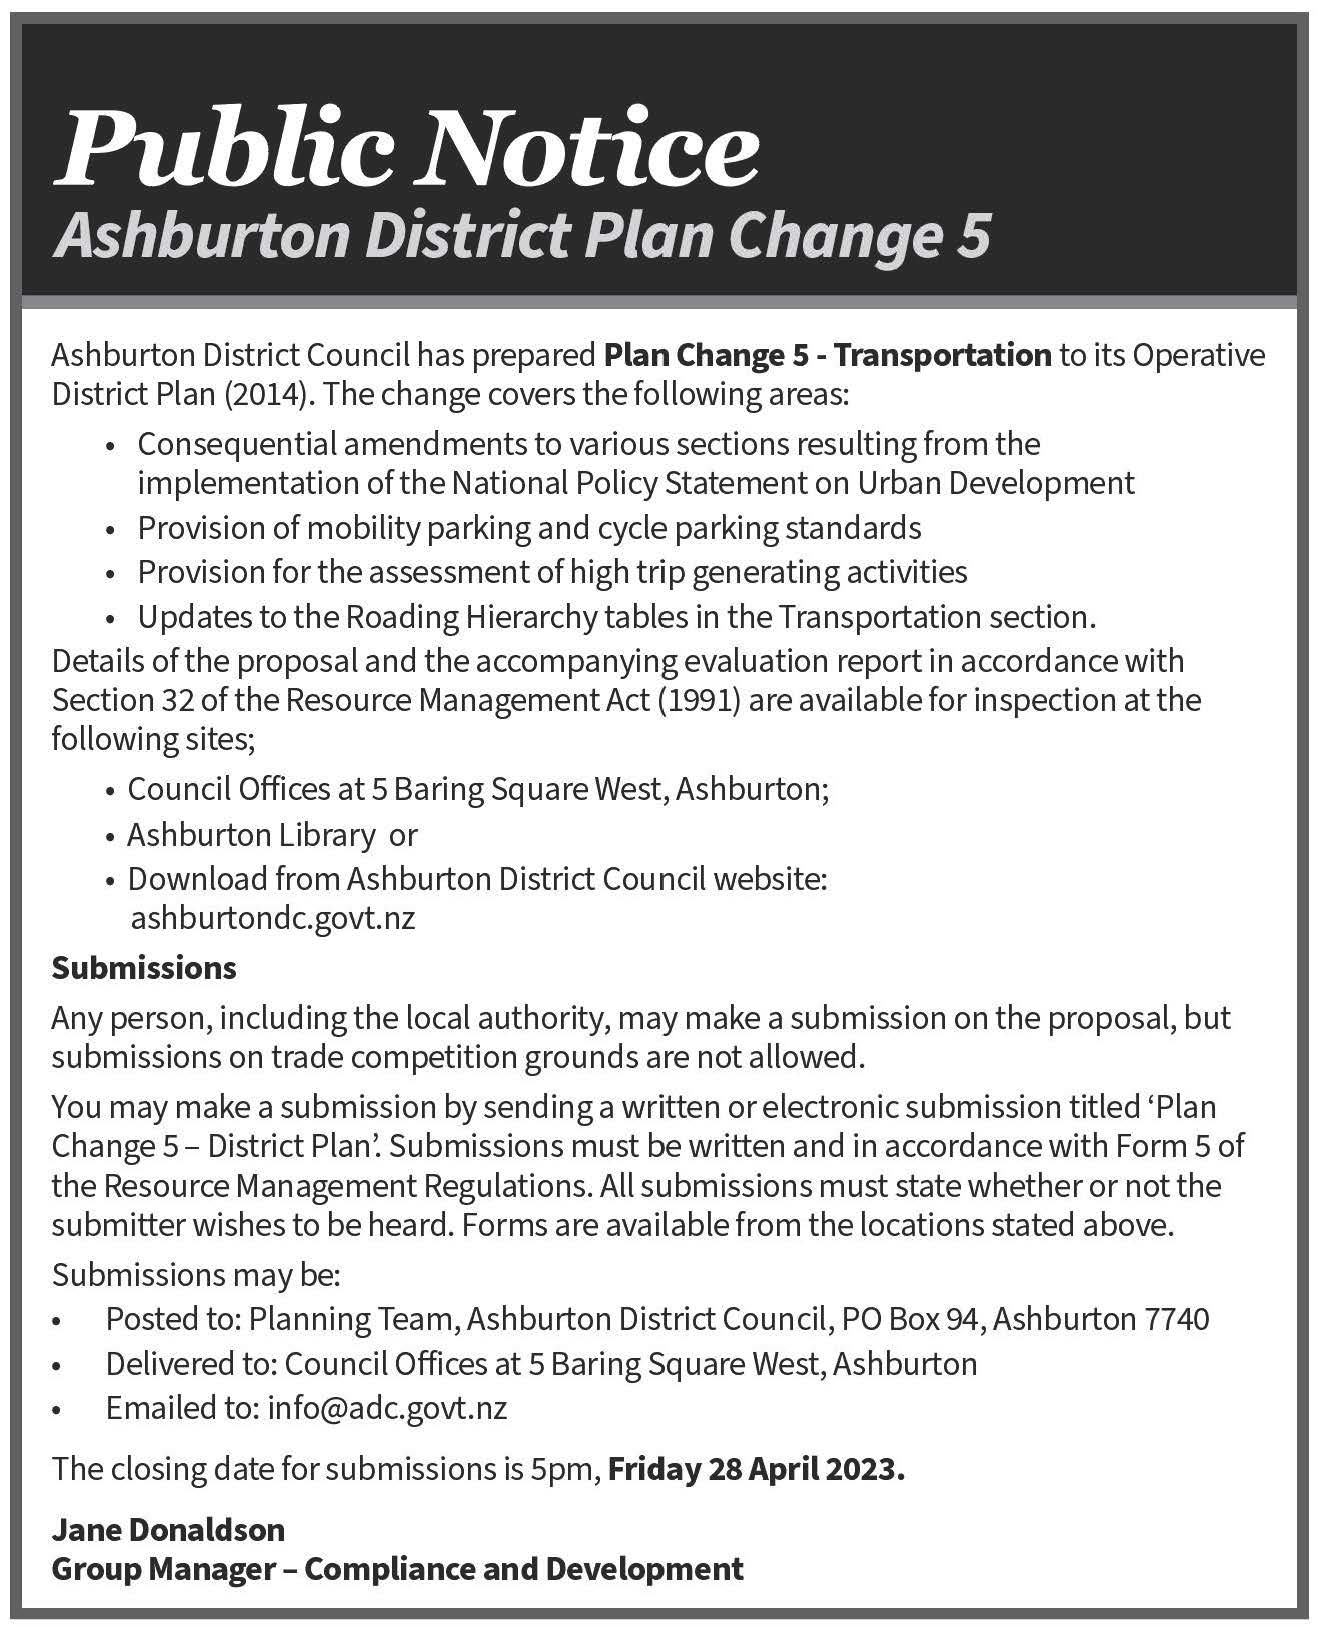 Public notice of plan change